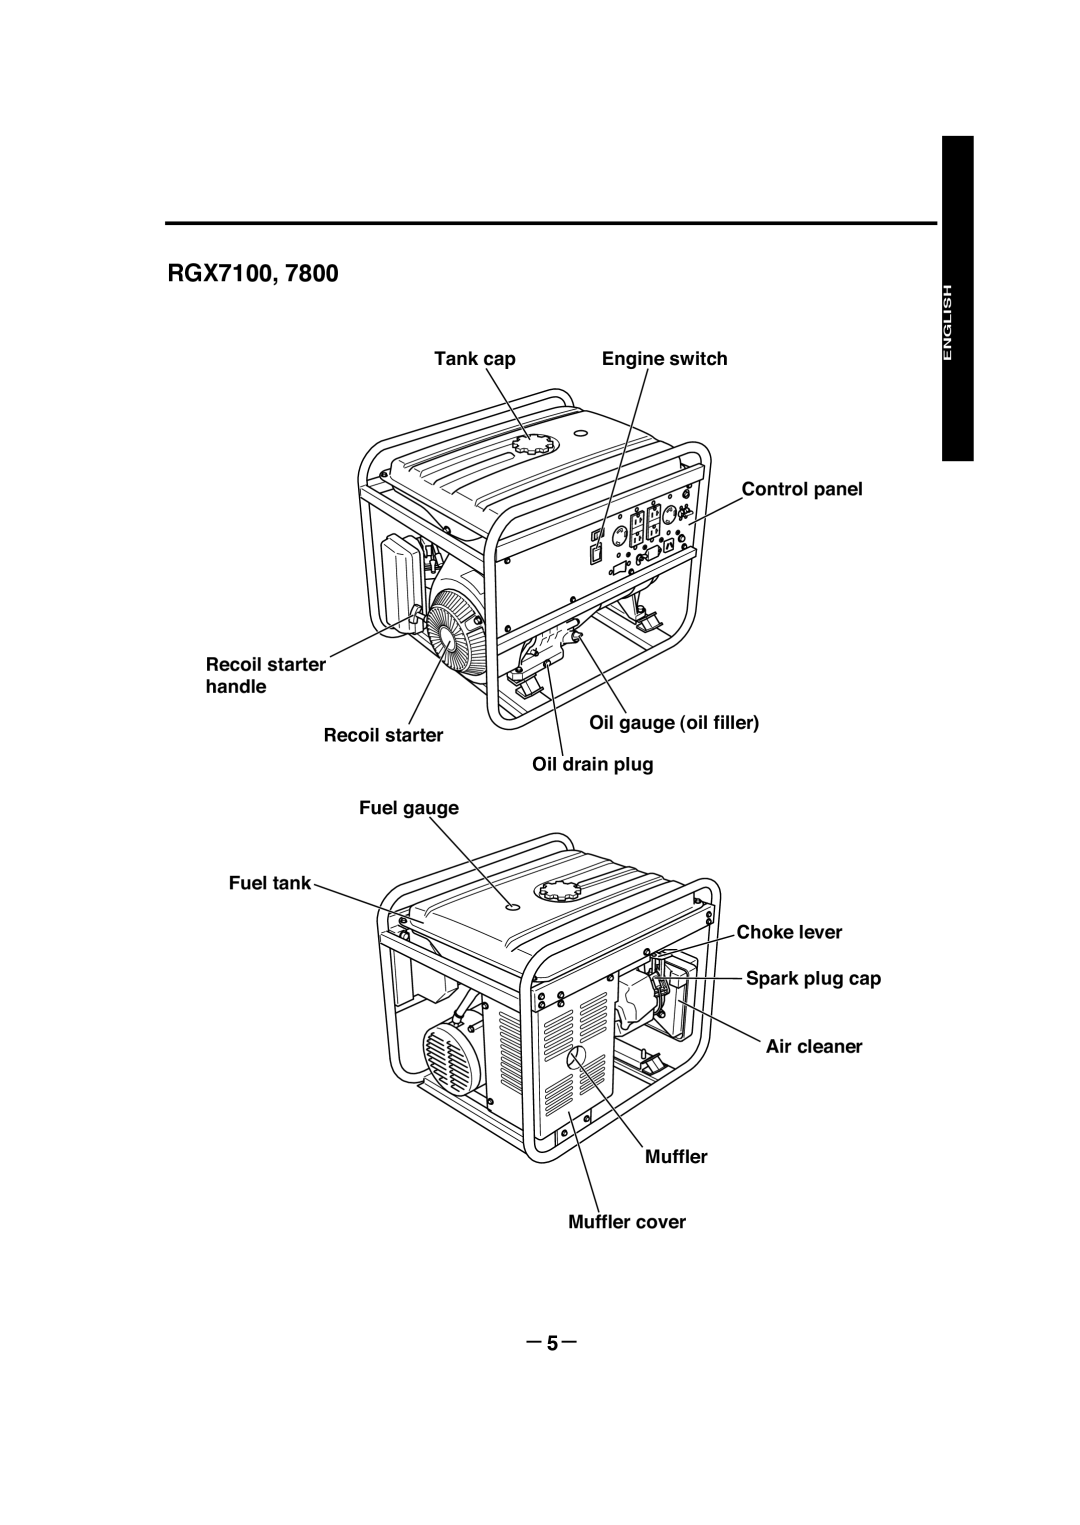 Subaru RGX7800, RGX3000, RGX3800 manual RGX7100, － 5－, Tank cap, Engine switch, Recoil starter handle Recoil starter, English 